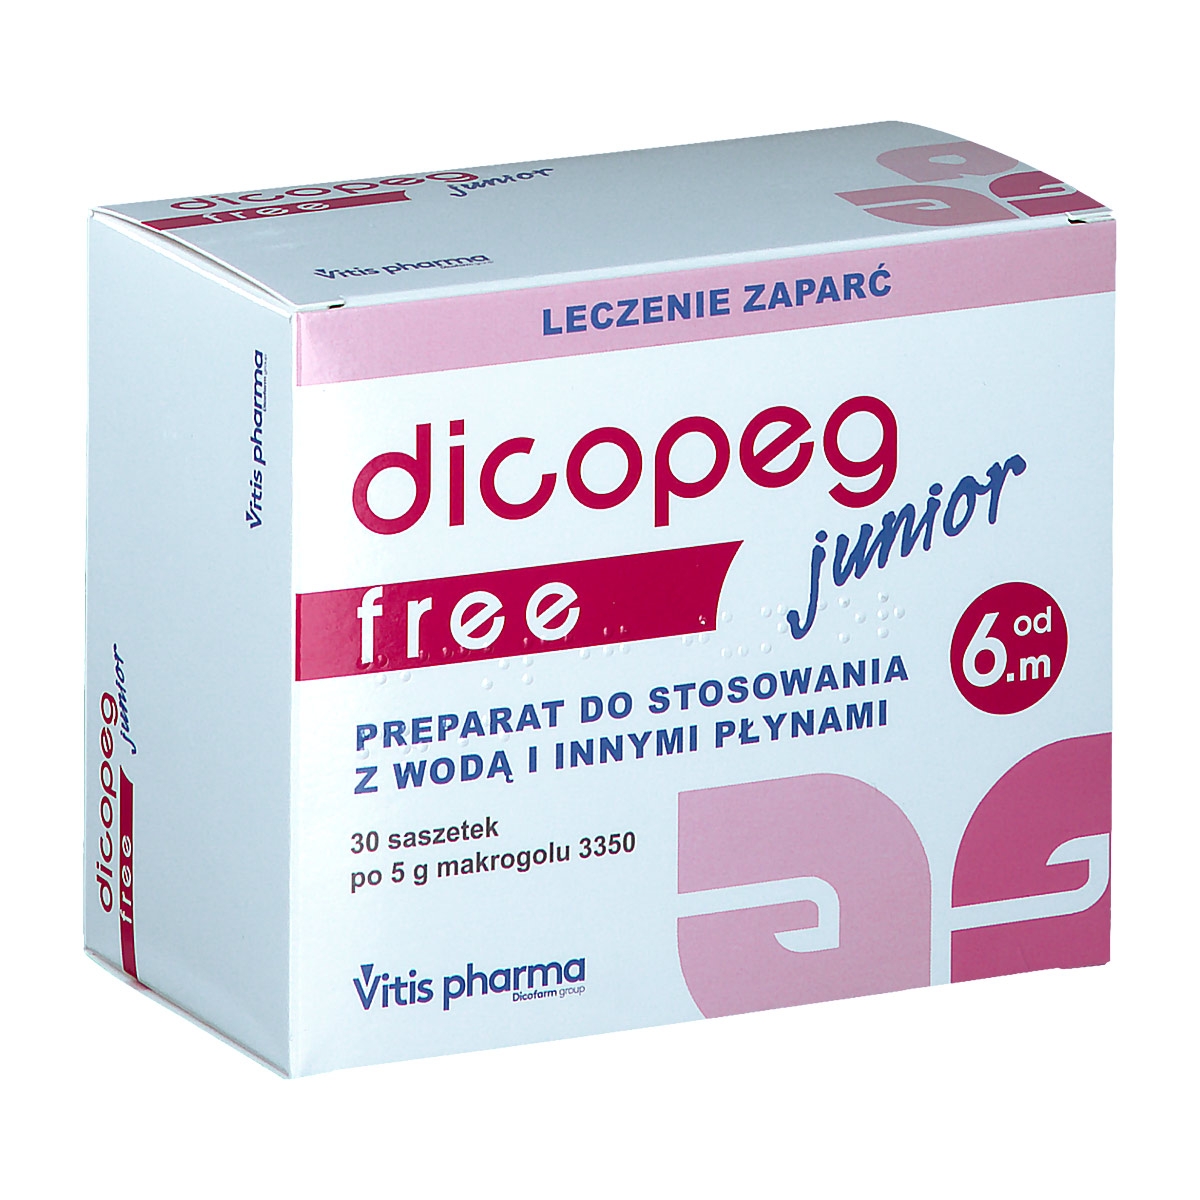 Image of dicopeg junior free saszetki 30